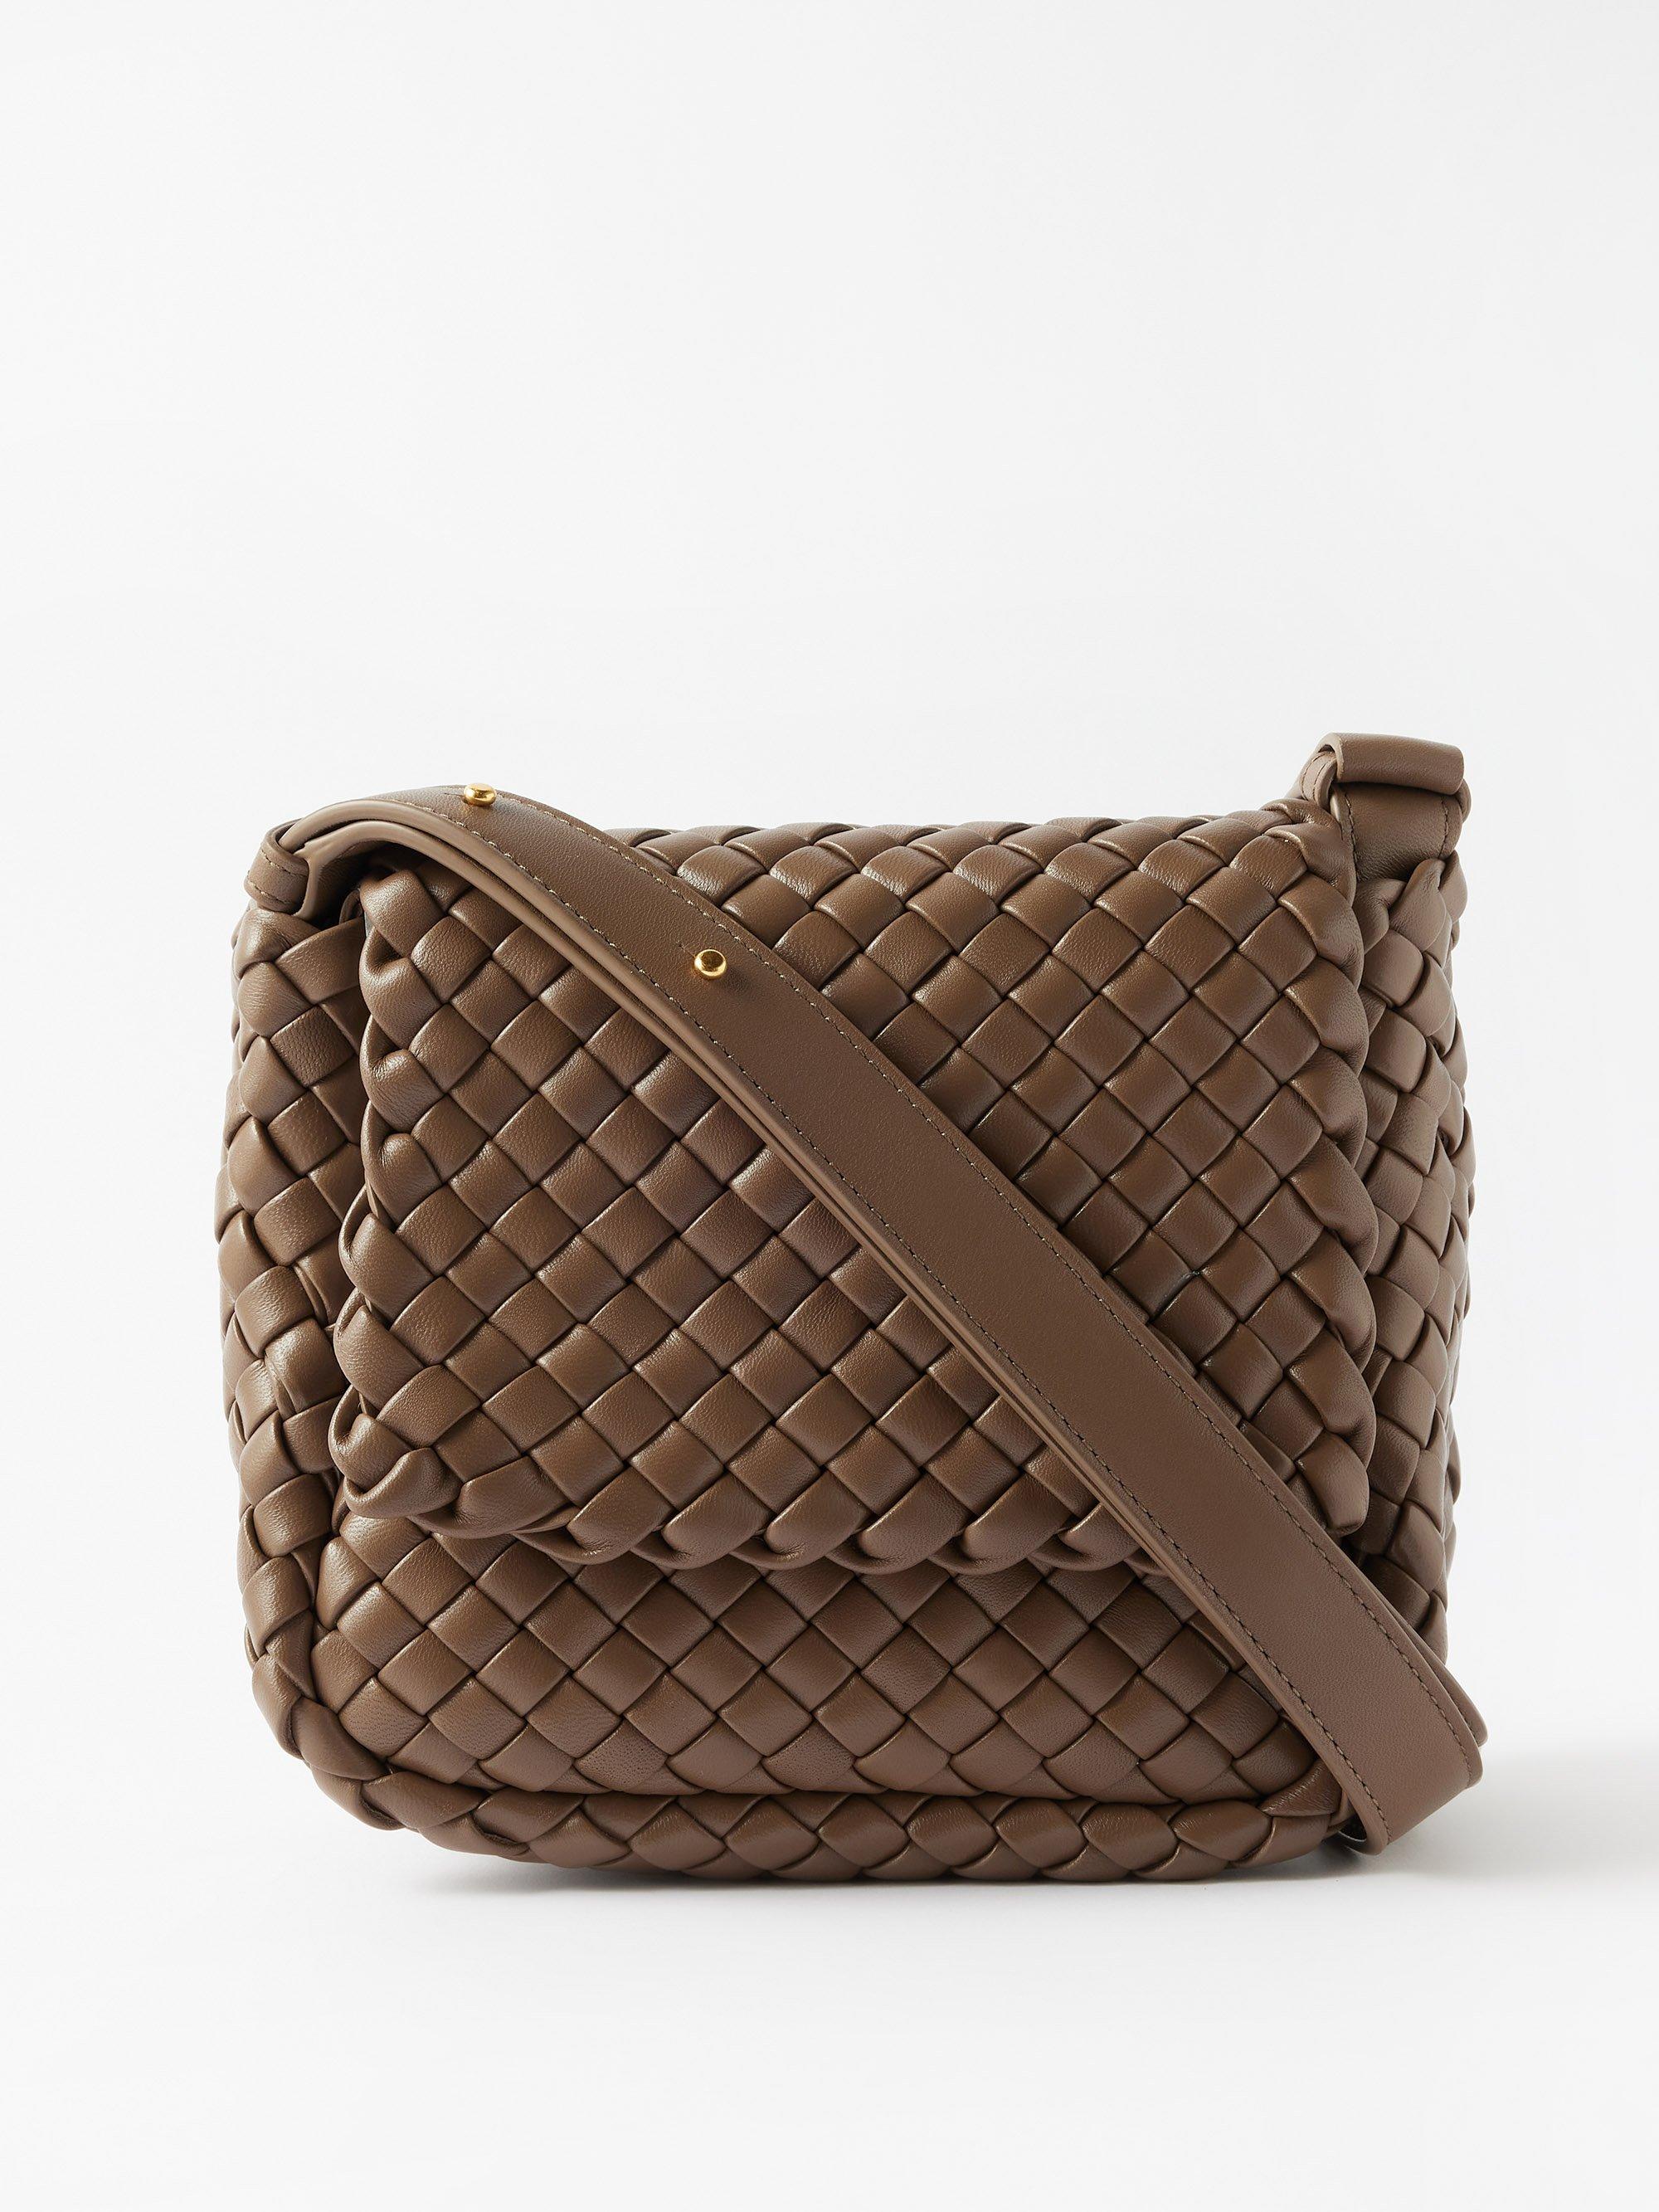 Intrecciato Leather Shoulder Bag in Beige - Bottega Veneta